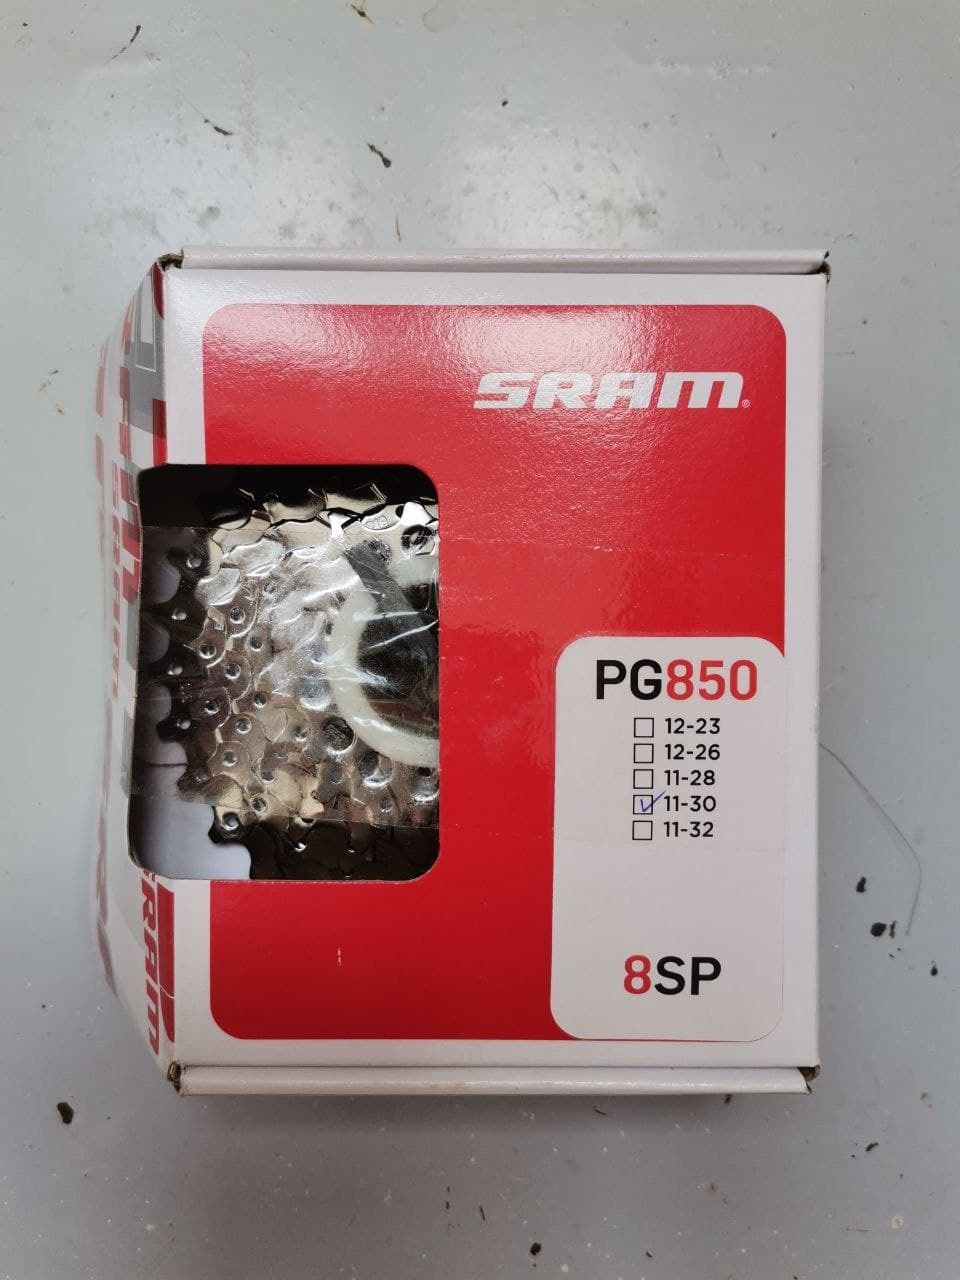 Новая кассета Sram PG850, 11-30